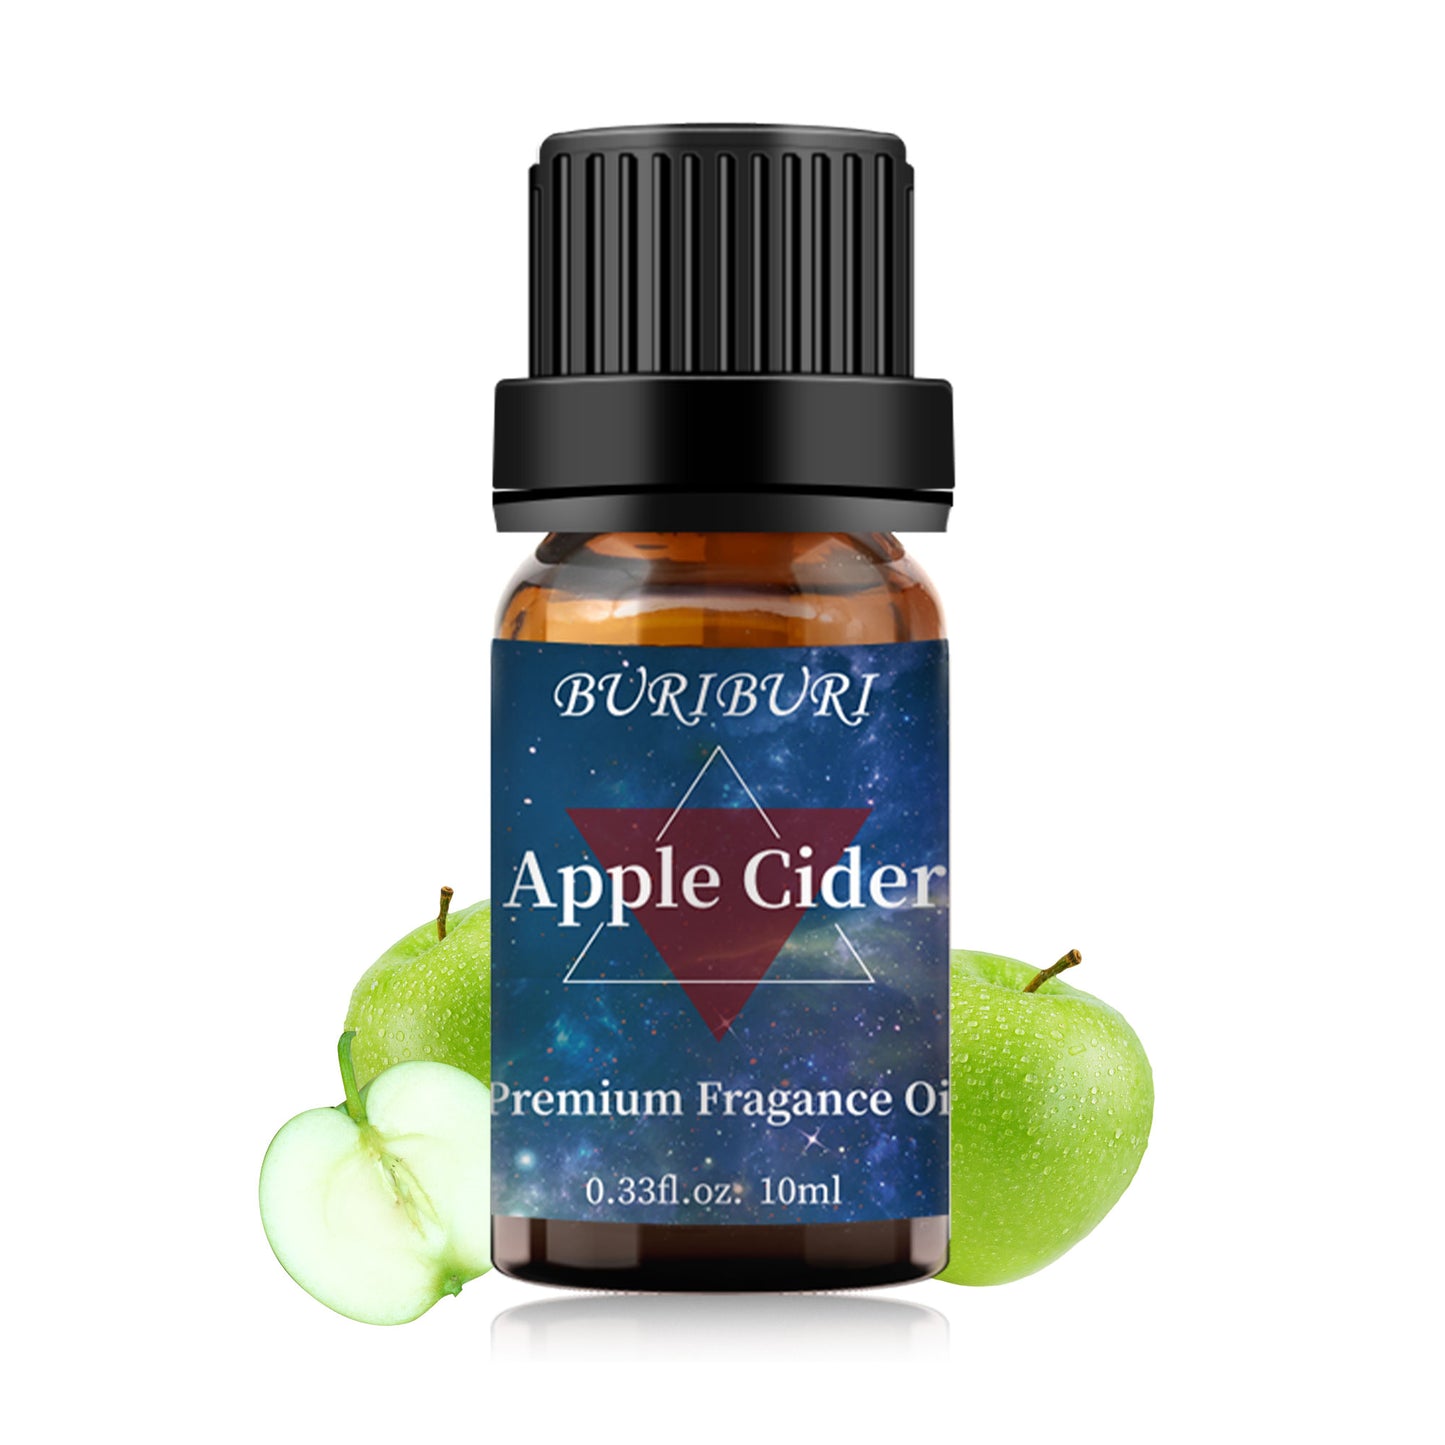 Premium Grade Apple Cider Scented Fragrance Oil - 10ml